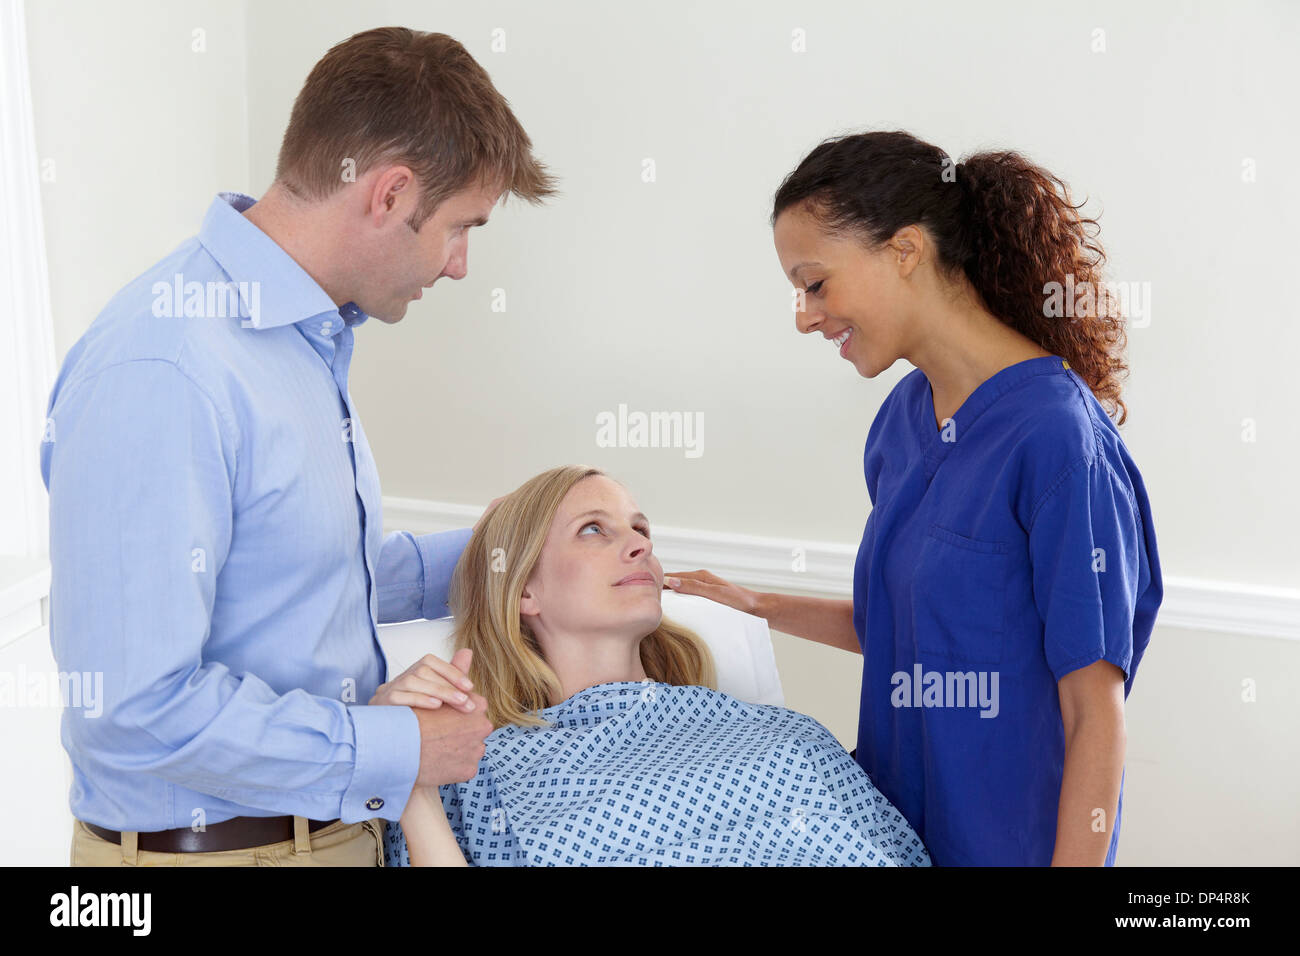 Woman preparing for medical procedure Stock Photo